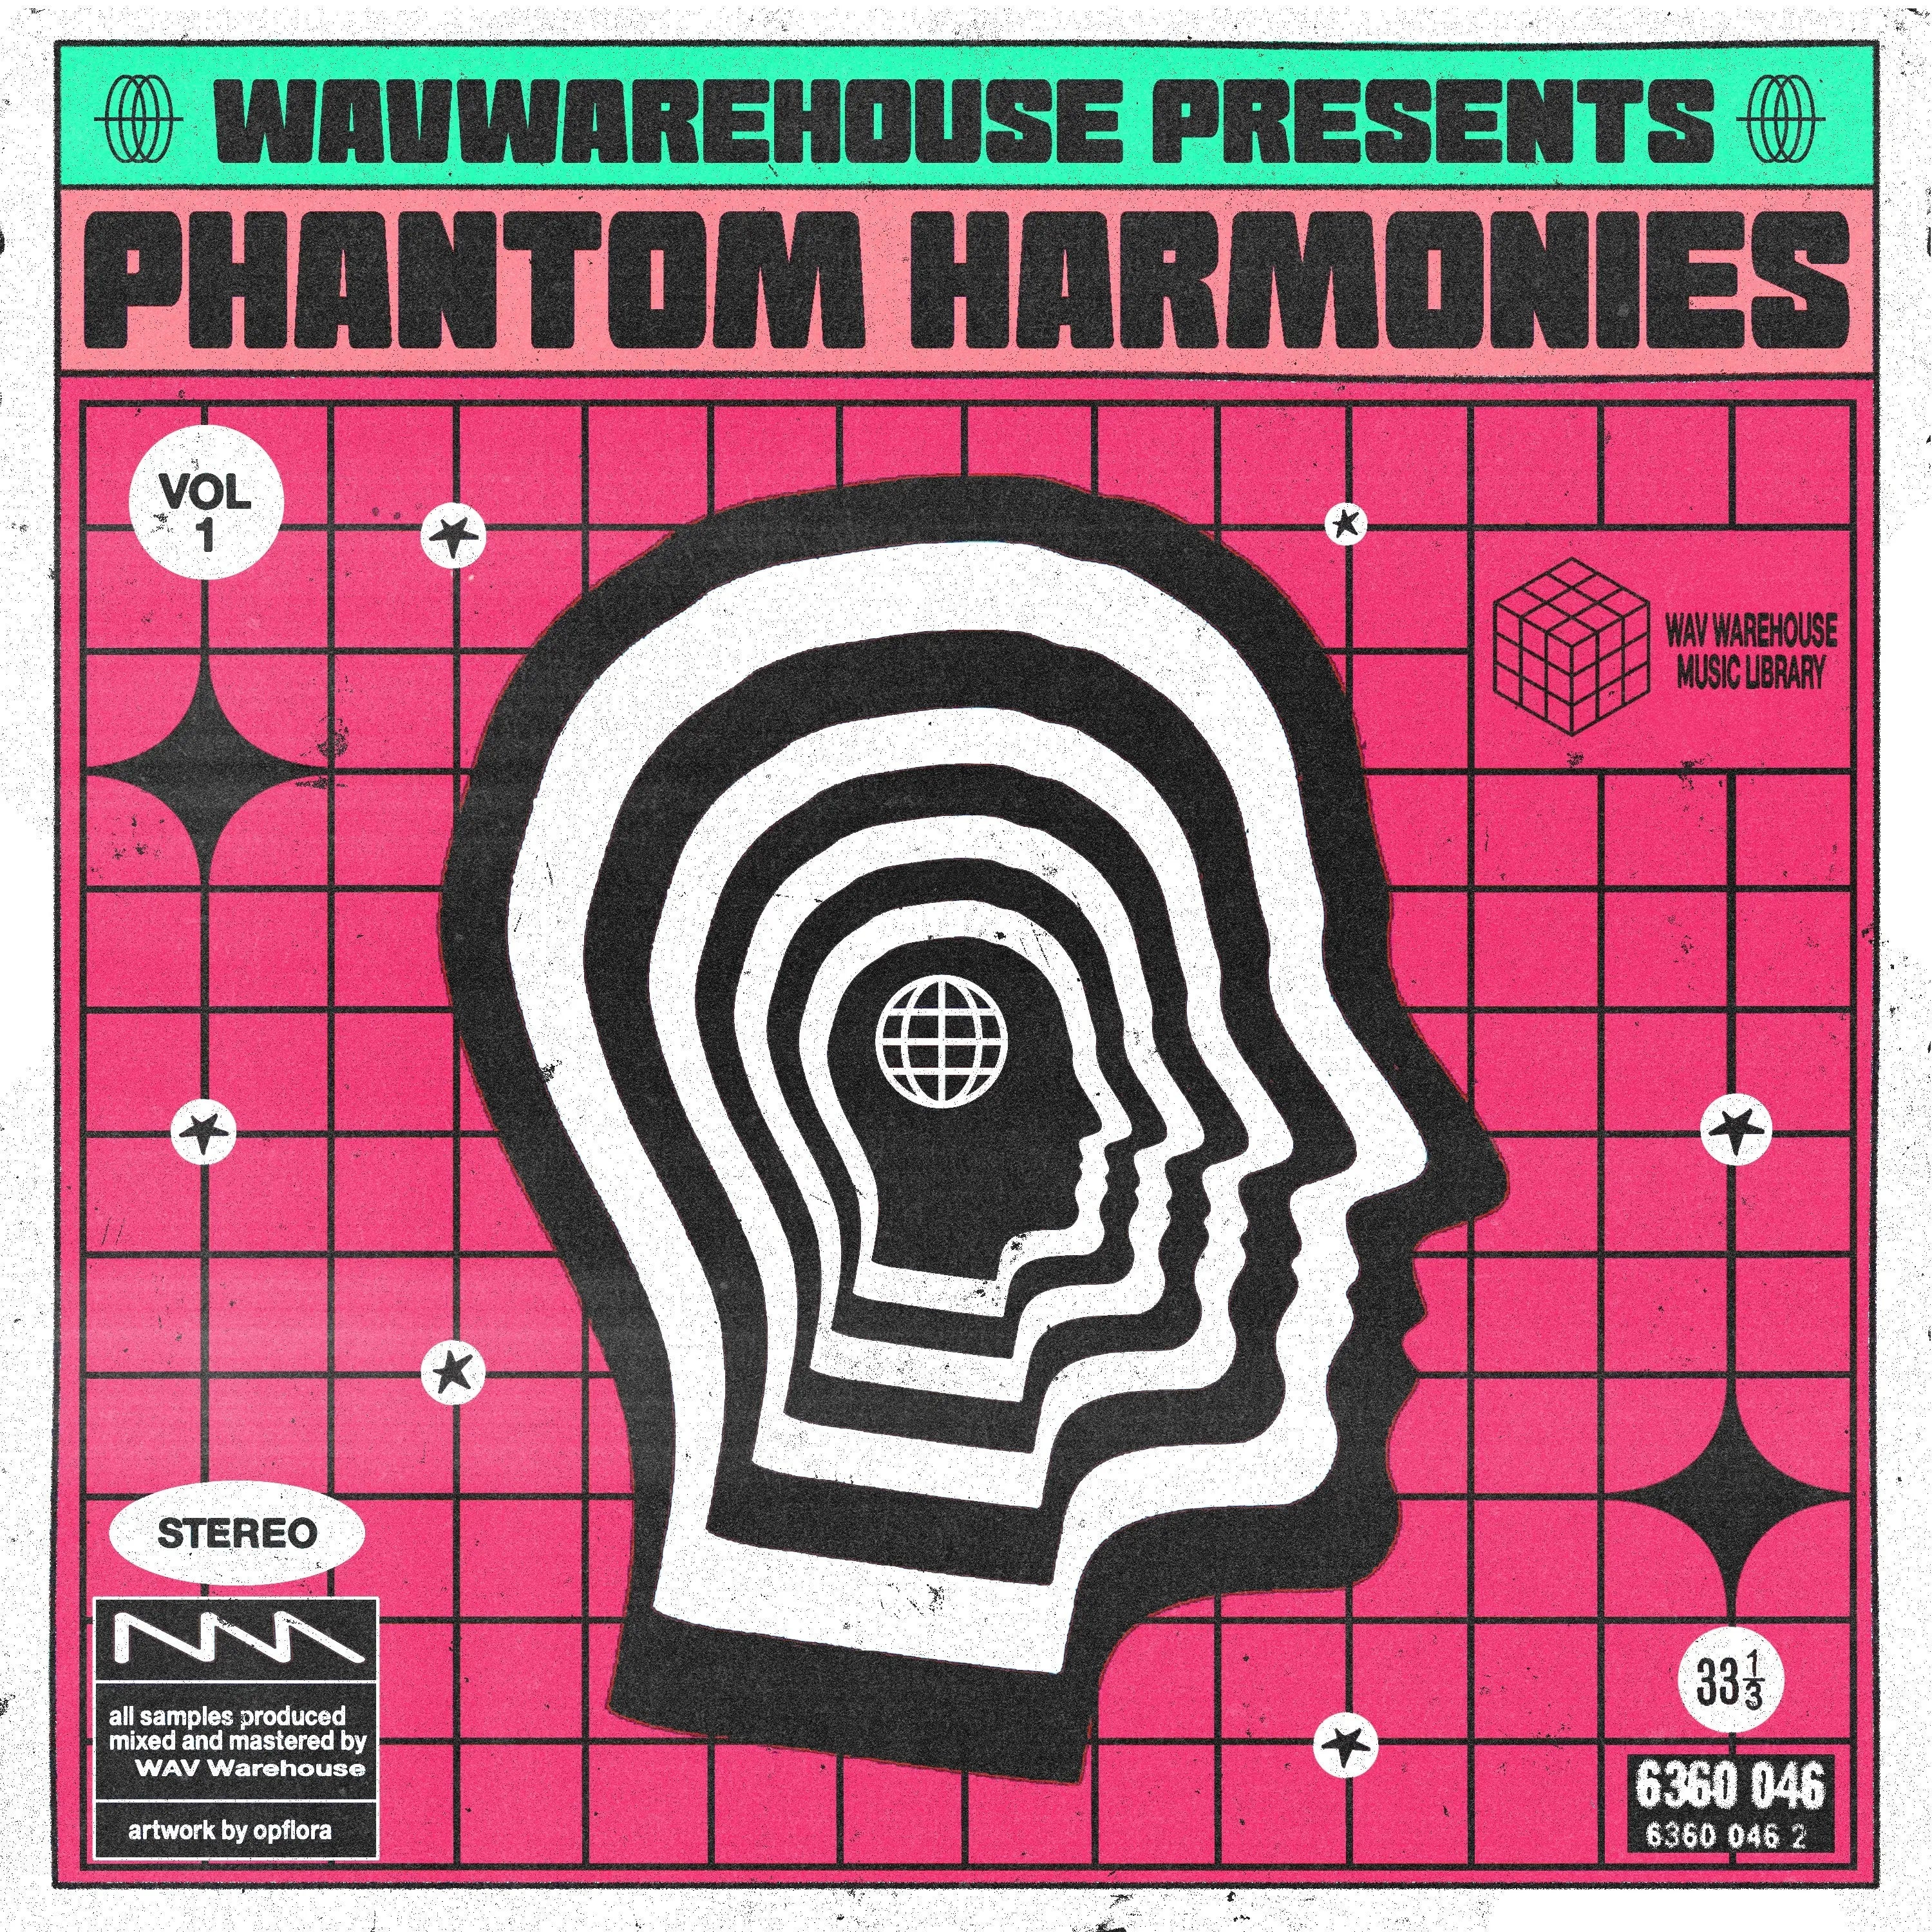 Phantom Harmonies Vol. 1 Wav Warehouse